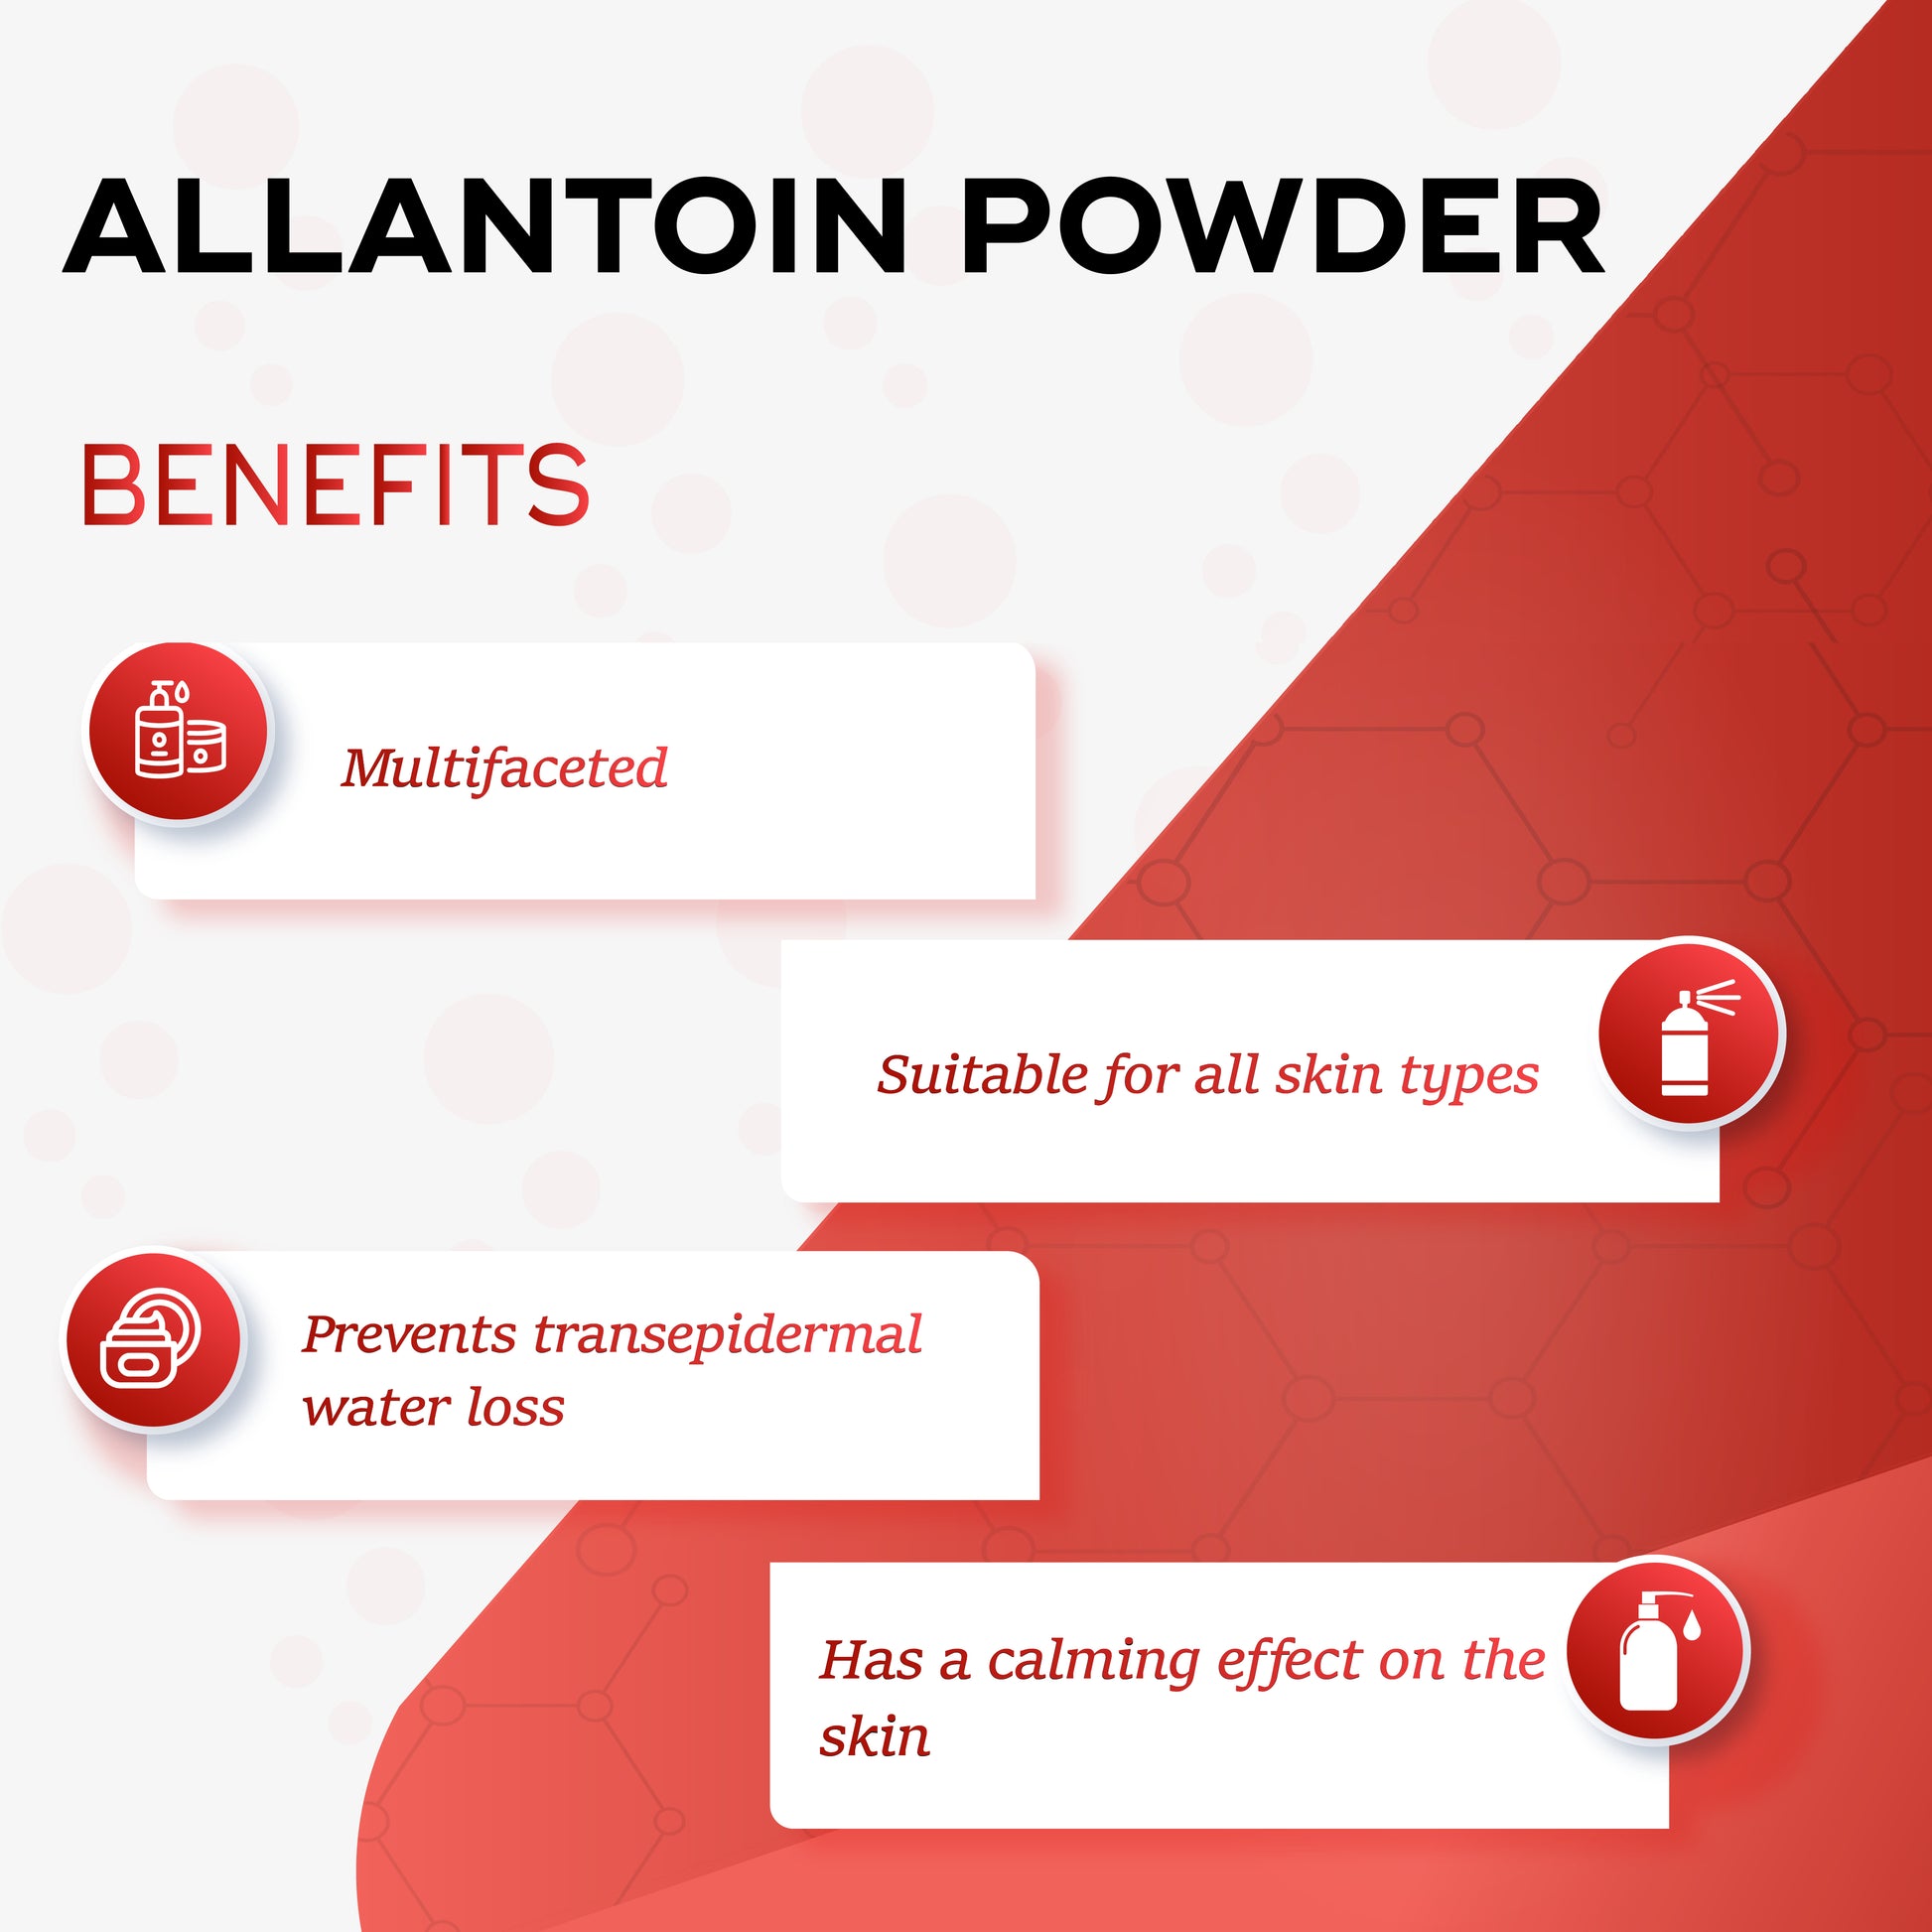 allantoin powder benefits, benefits listed for allantoin powder